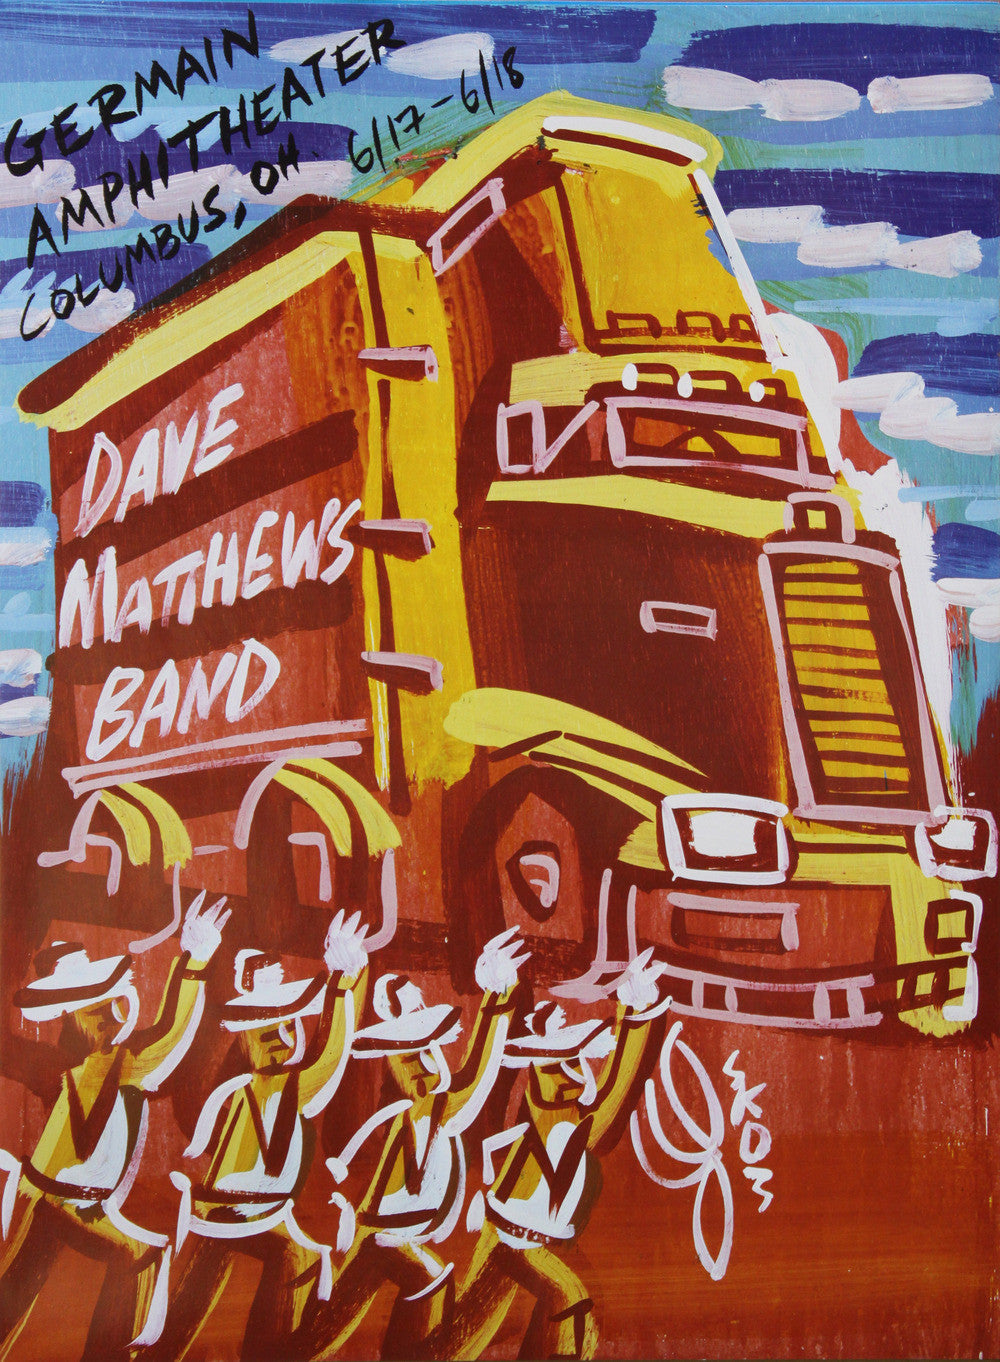 Steve Keene - 2003 - Dave Matthews Band Columbus Ohio Concert Poster